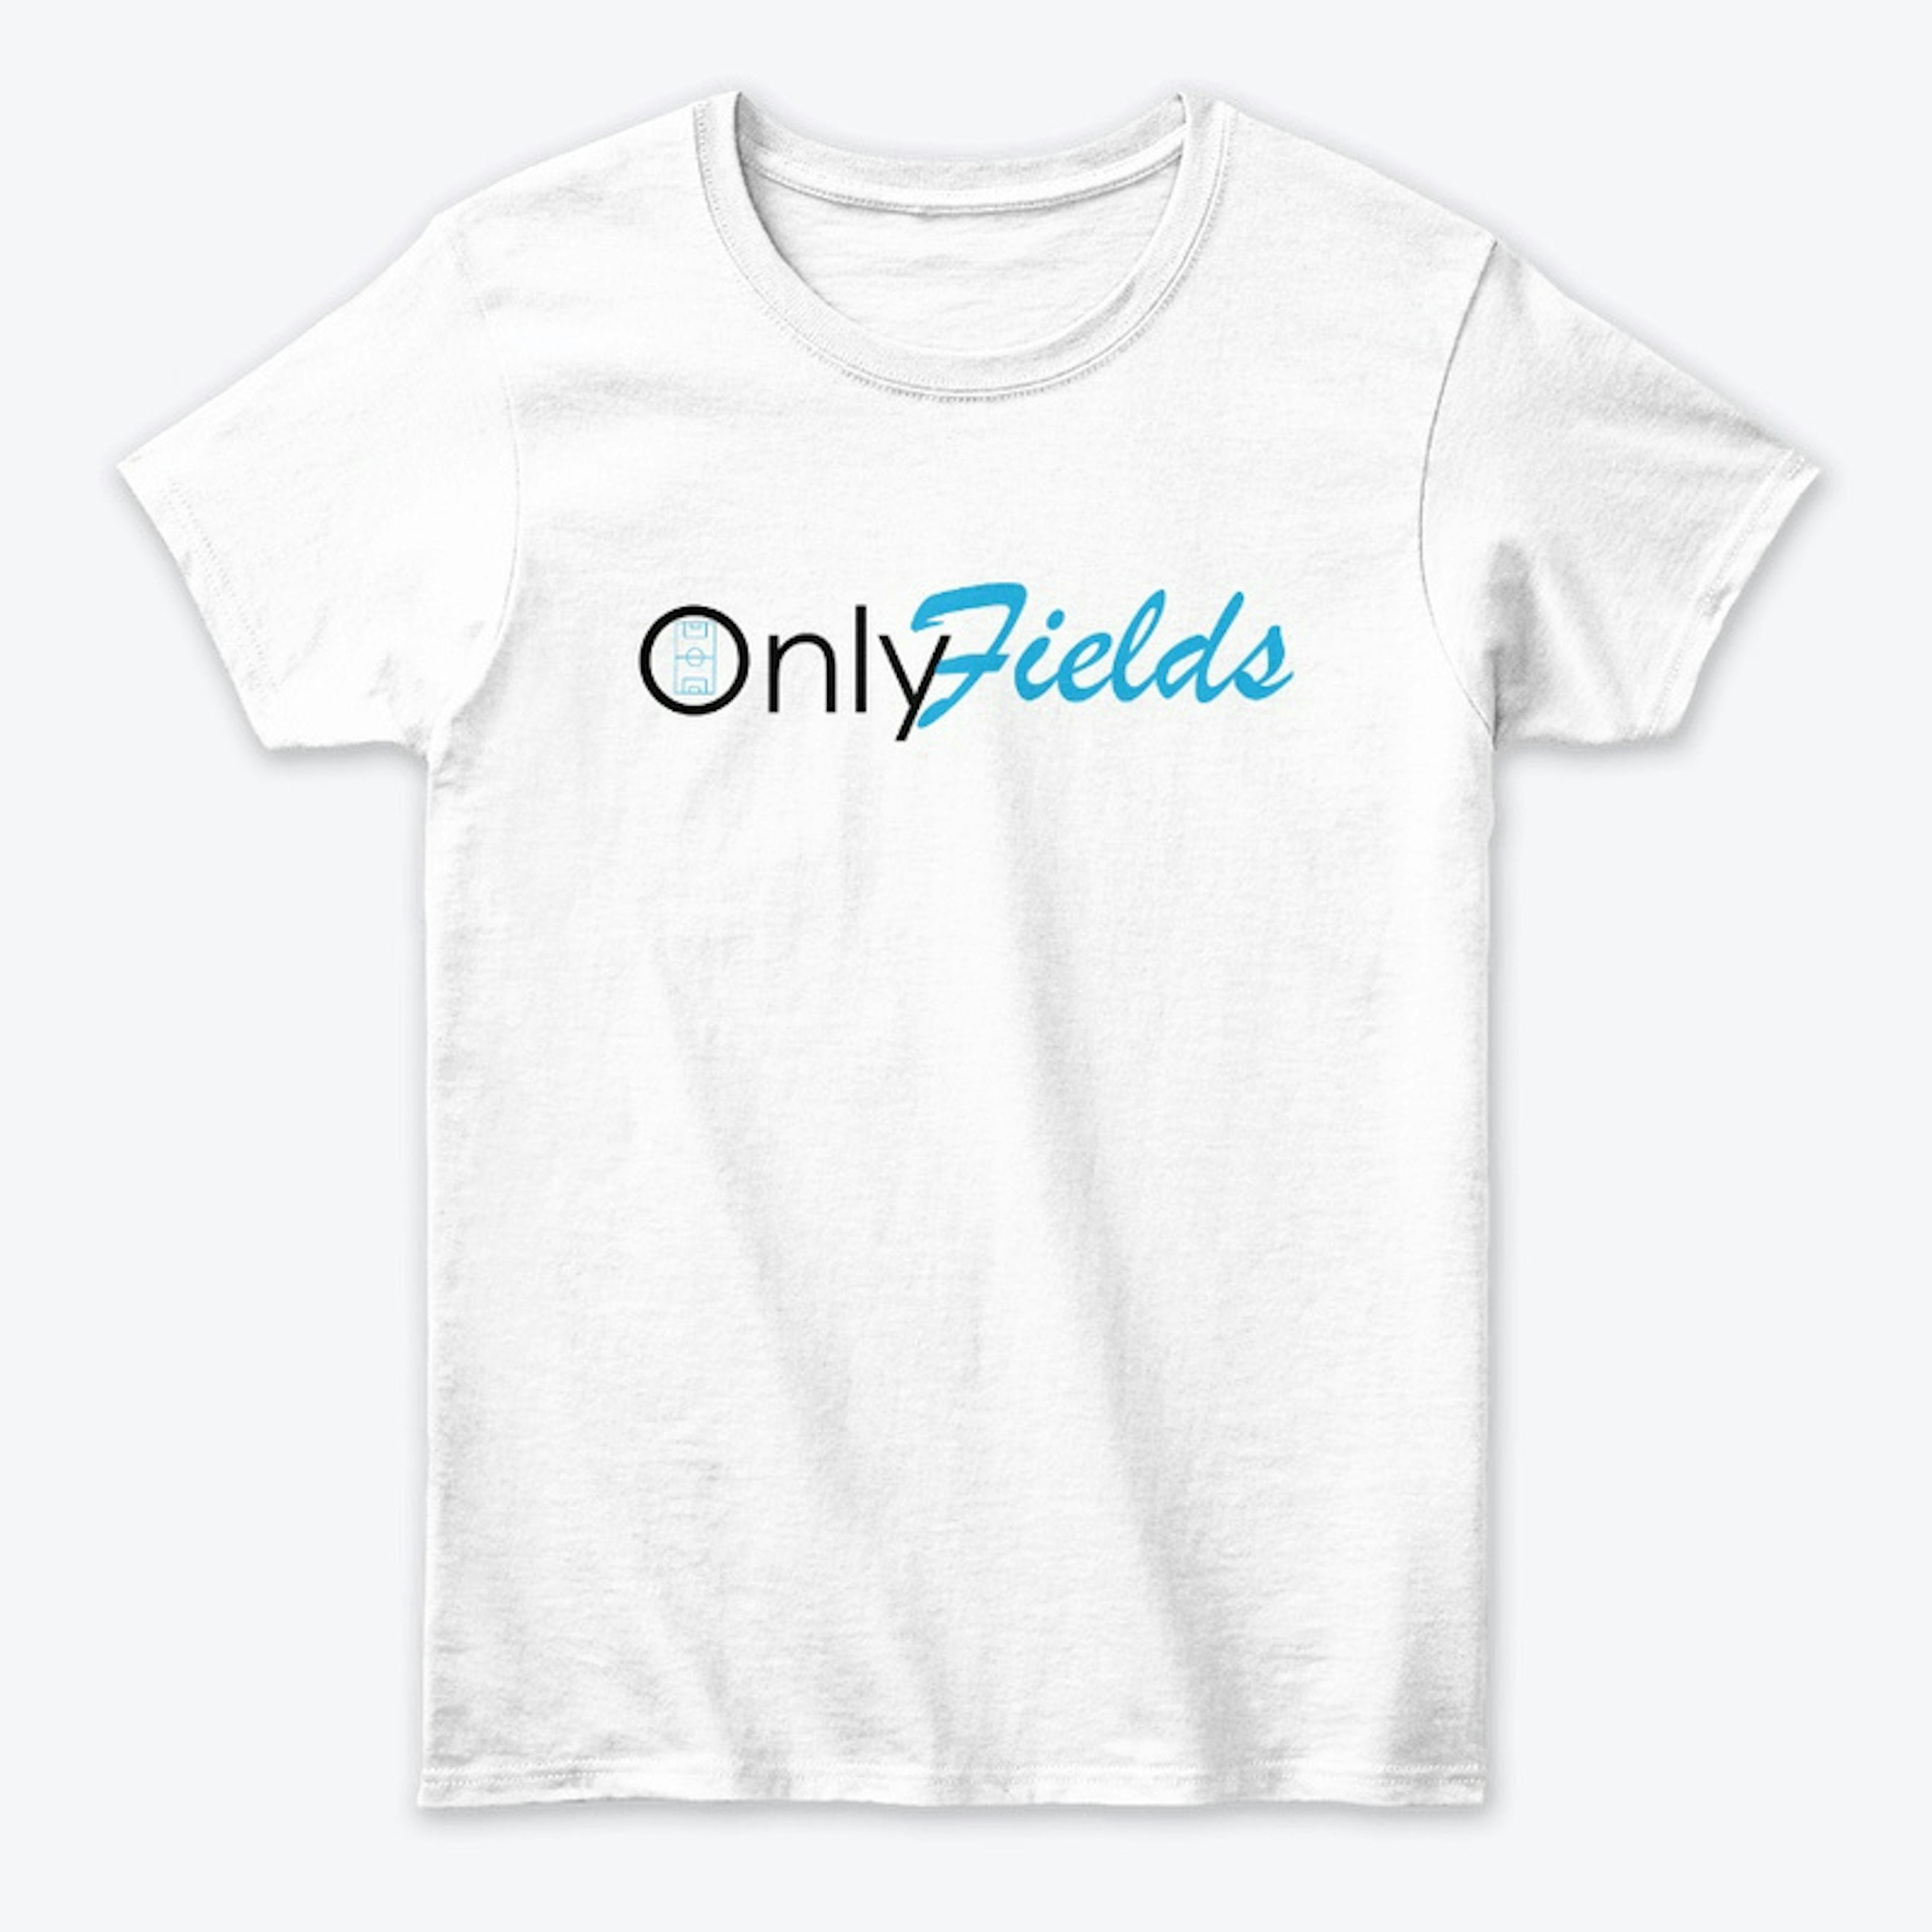 Only Fields